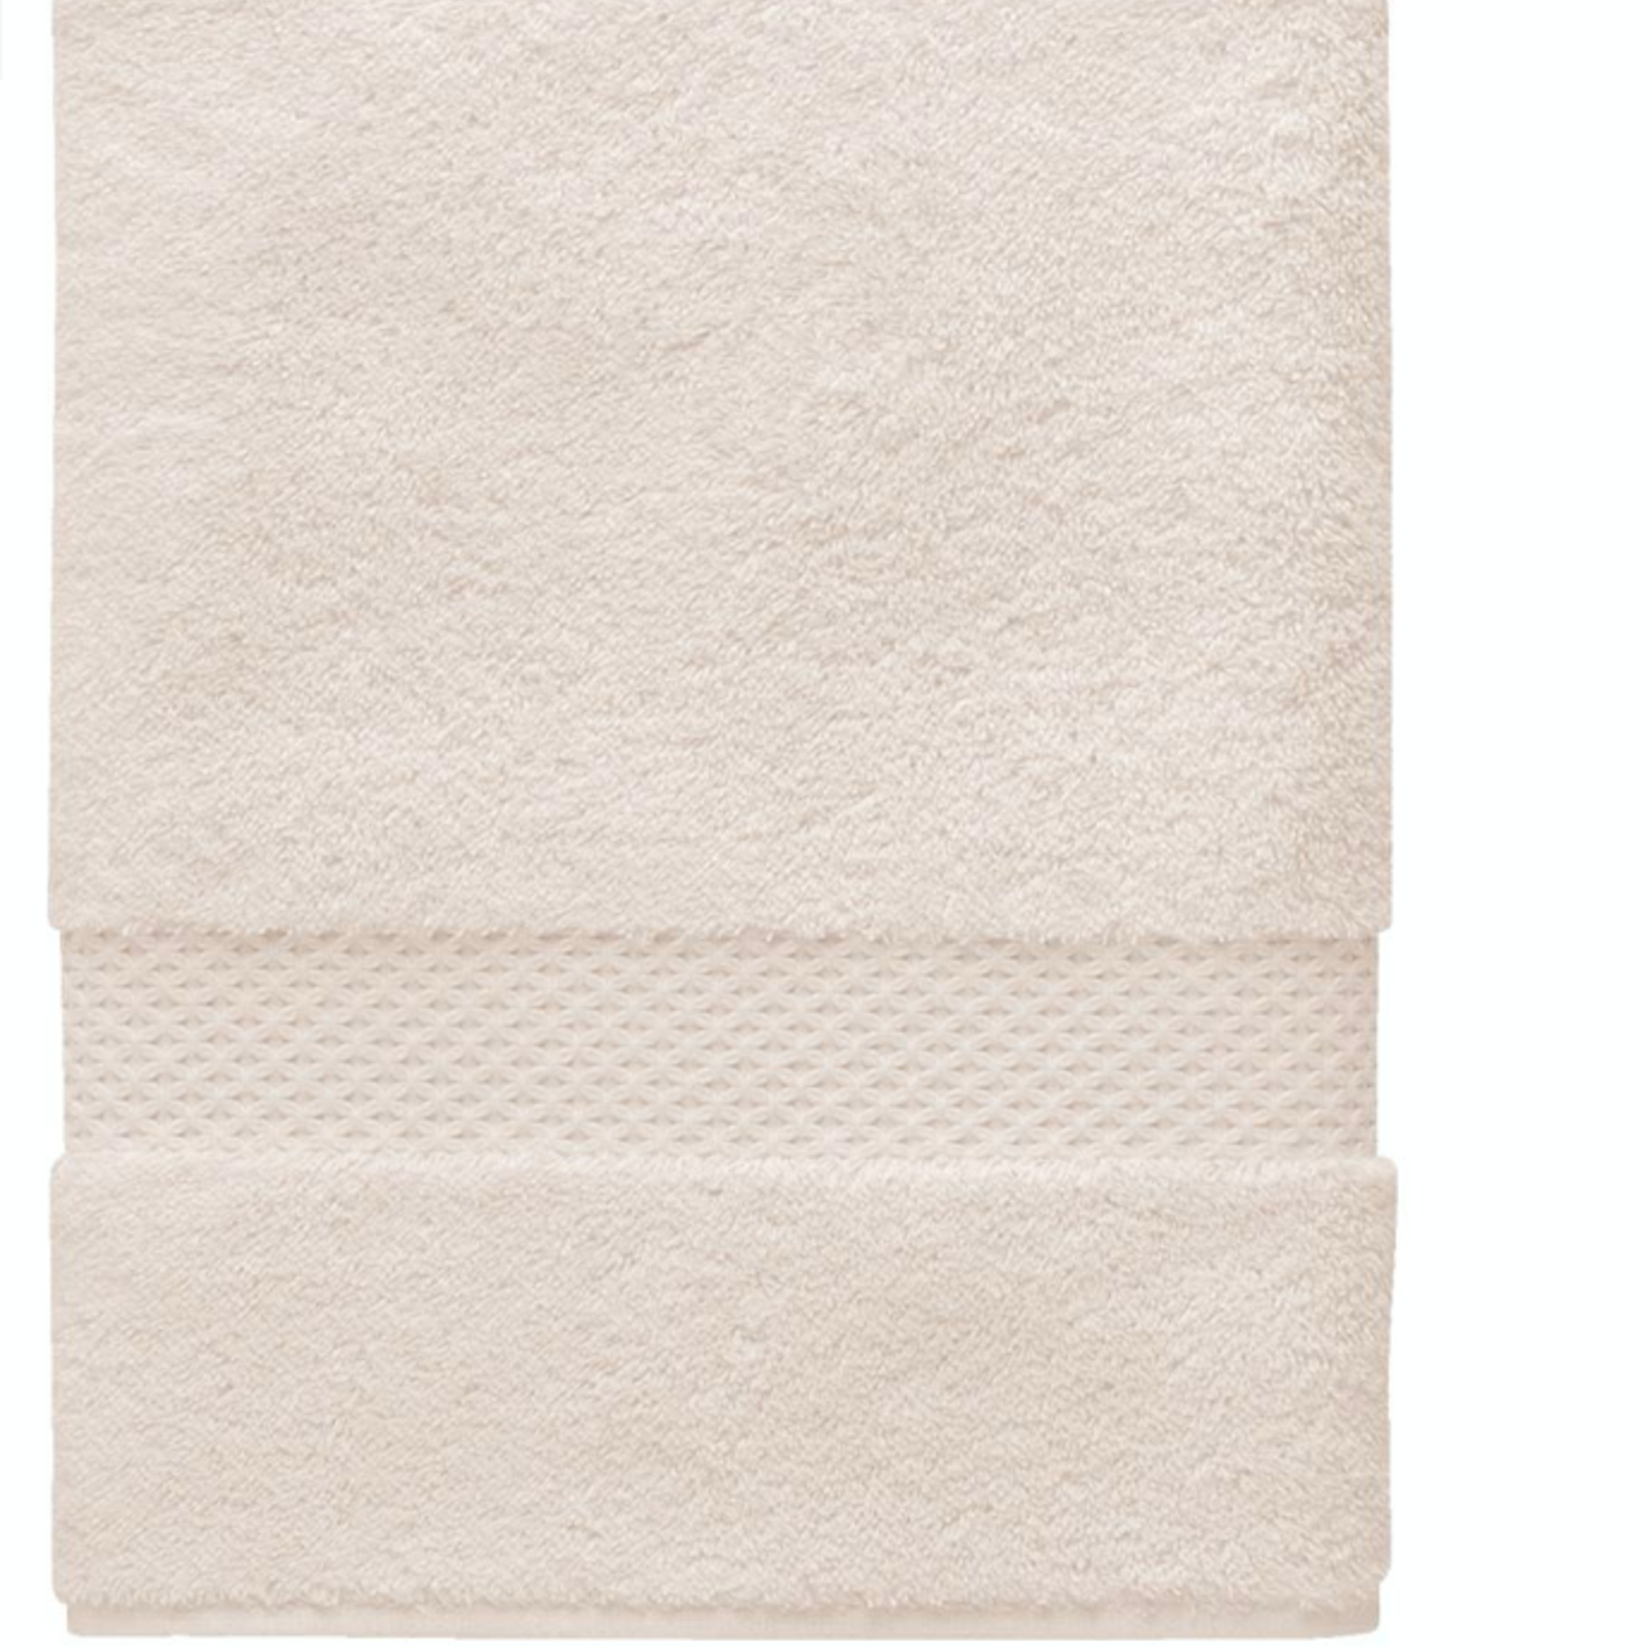 ETOILE (83% cotton, 17% modal) Hand Towel